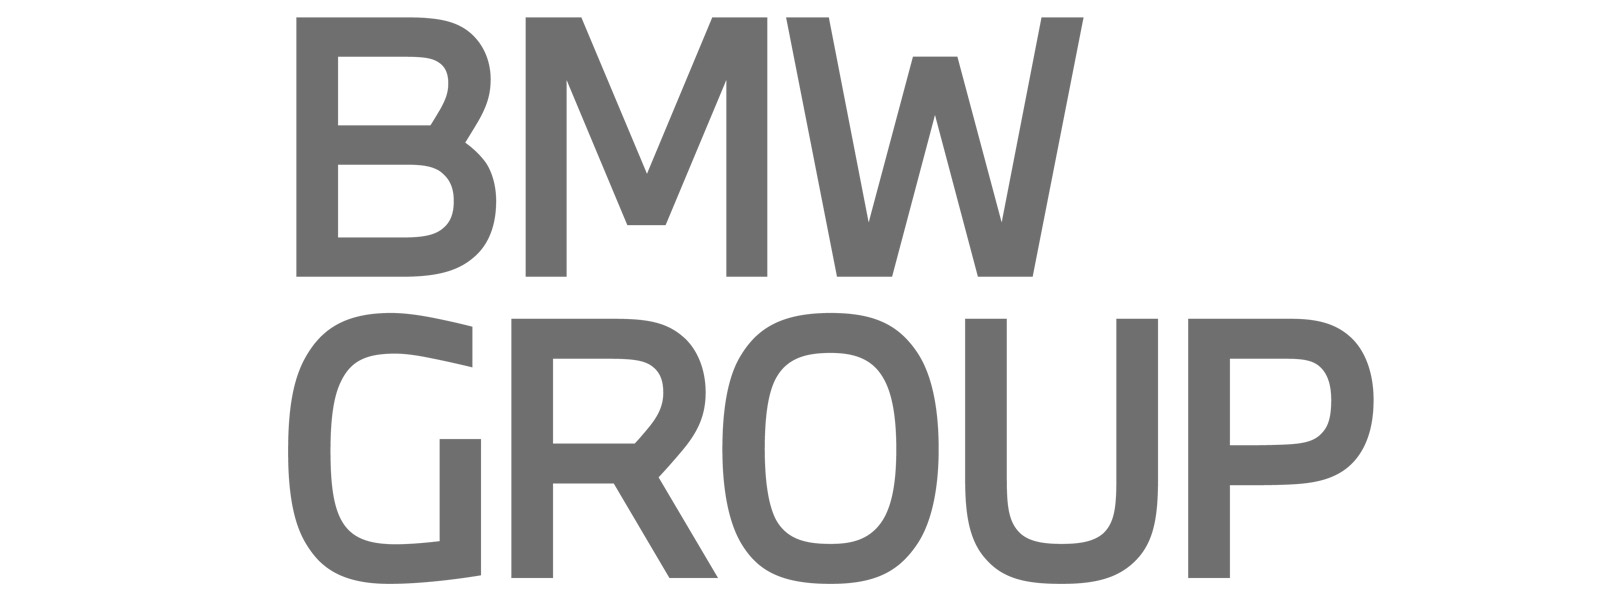 bmw-logo-large-idealworks-logistics